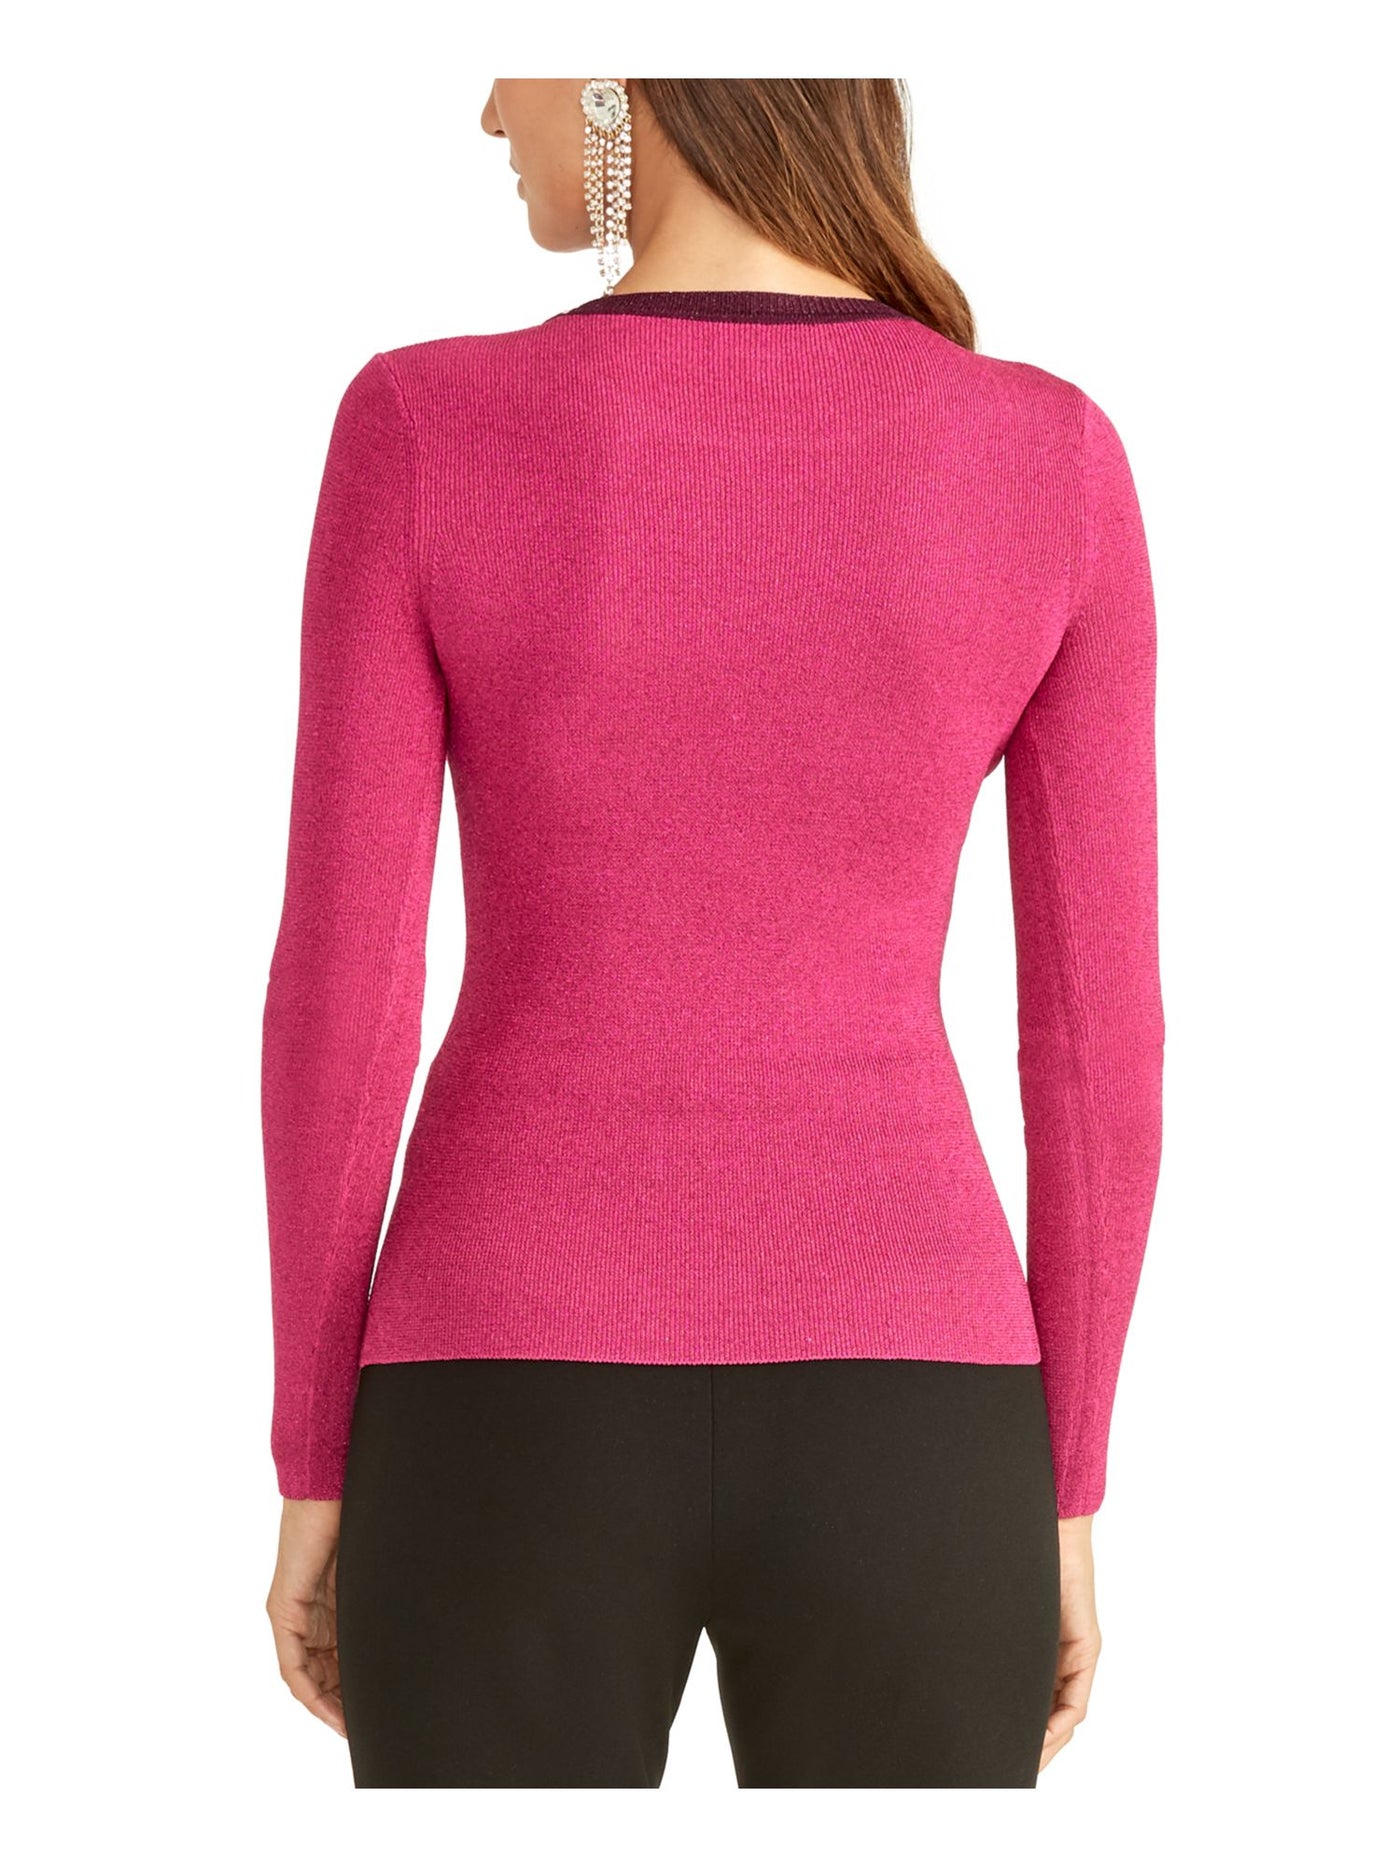 RACHEL RACHEL ROY Womens Pink Glitter Long Sleeve Crew Neck Sweater M